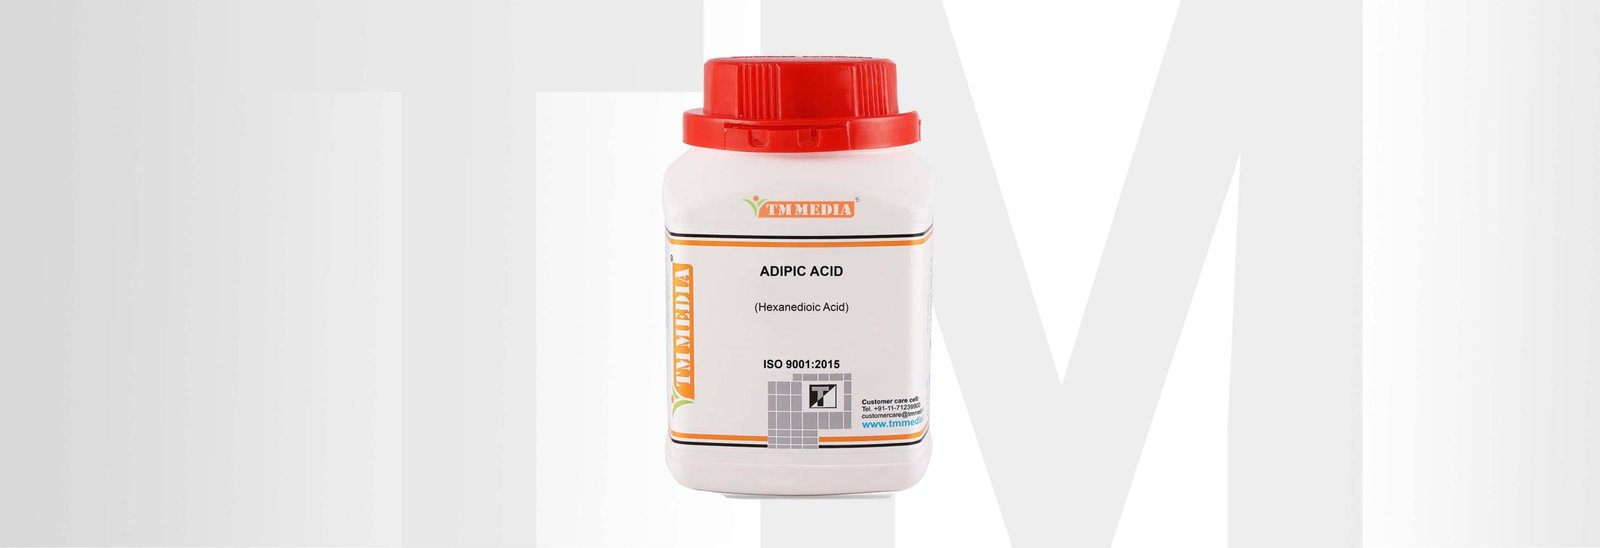 ADIPIC ACID, (Hexanedioic Acid) – TMMedia